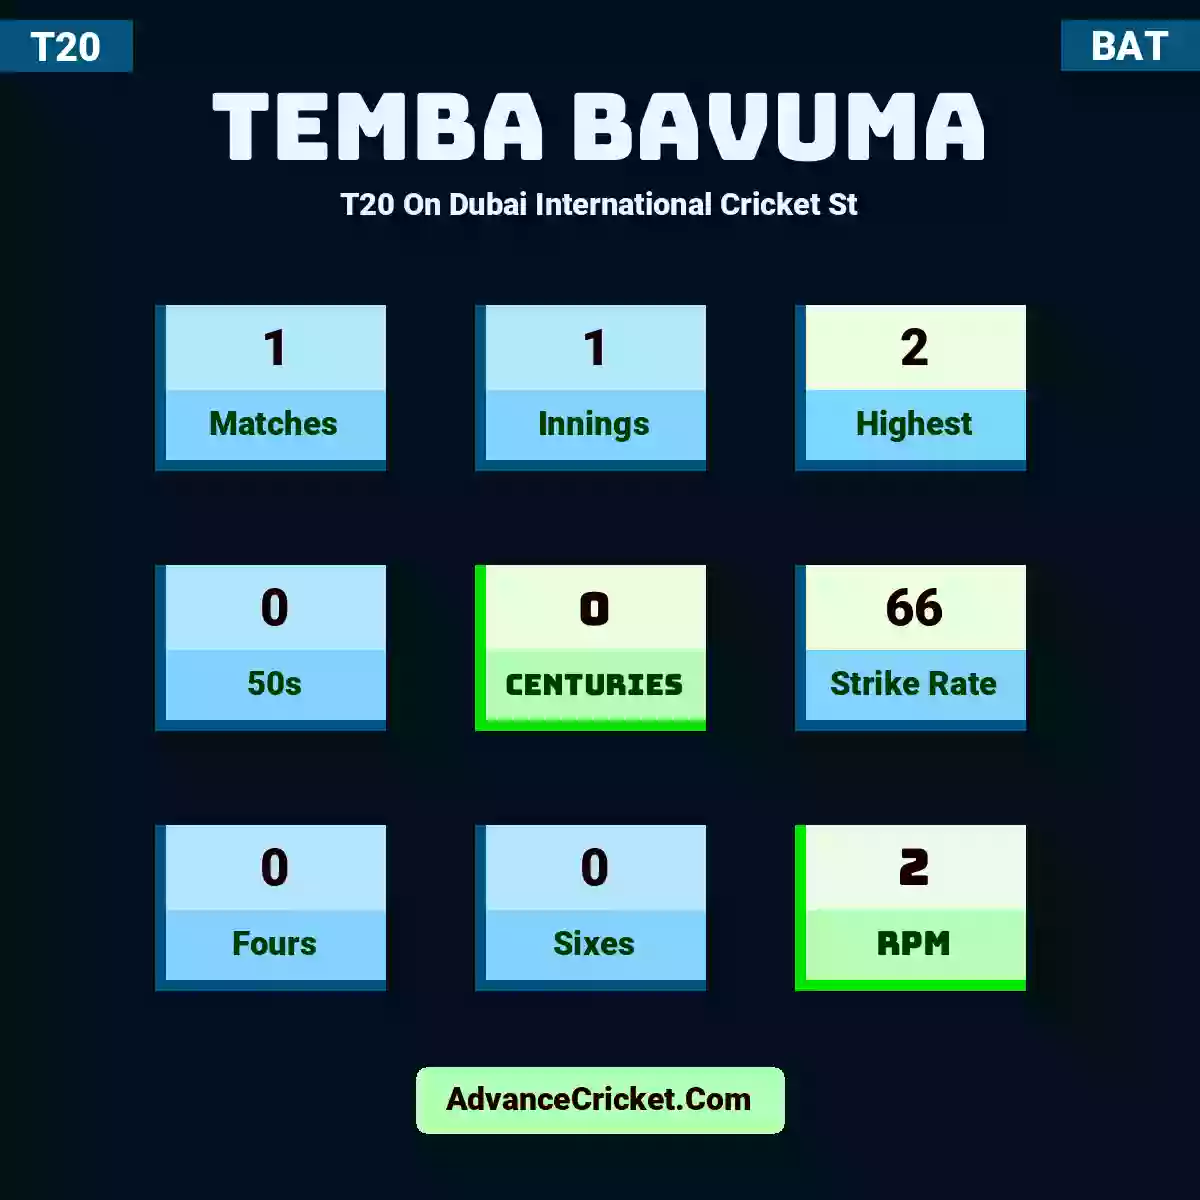 Temba Bavuma T20  On Dubai International Cricket St, Temba Bavuma played 1 matches, scored 2 runs as highest, 0 half-centuries, and 0 centuries, with a strike rate of 66. T.Bavuma hit 0 fours and 0 sixes, with an RPM of 2.